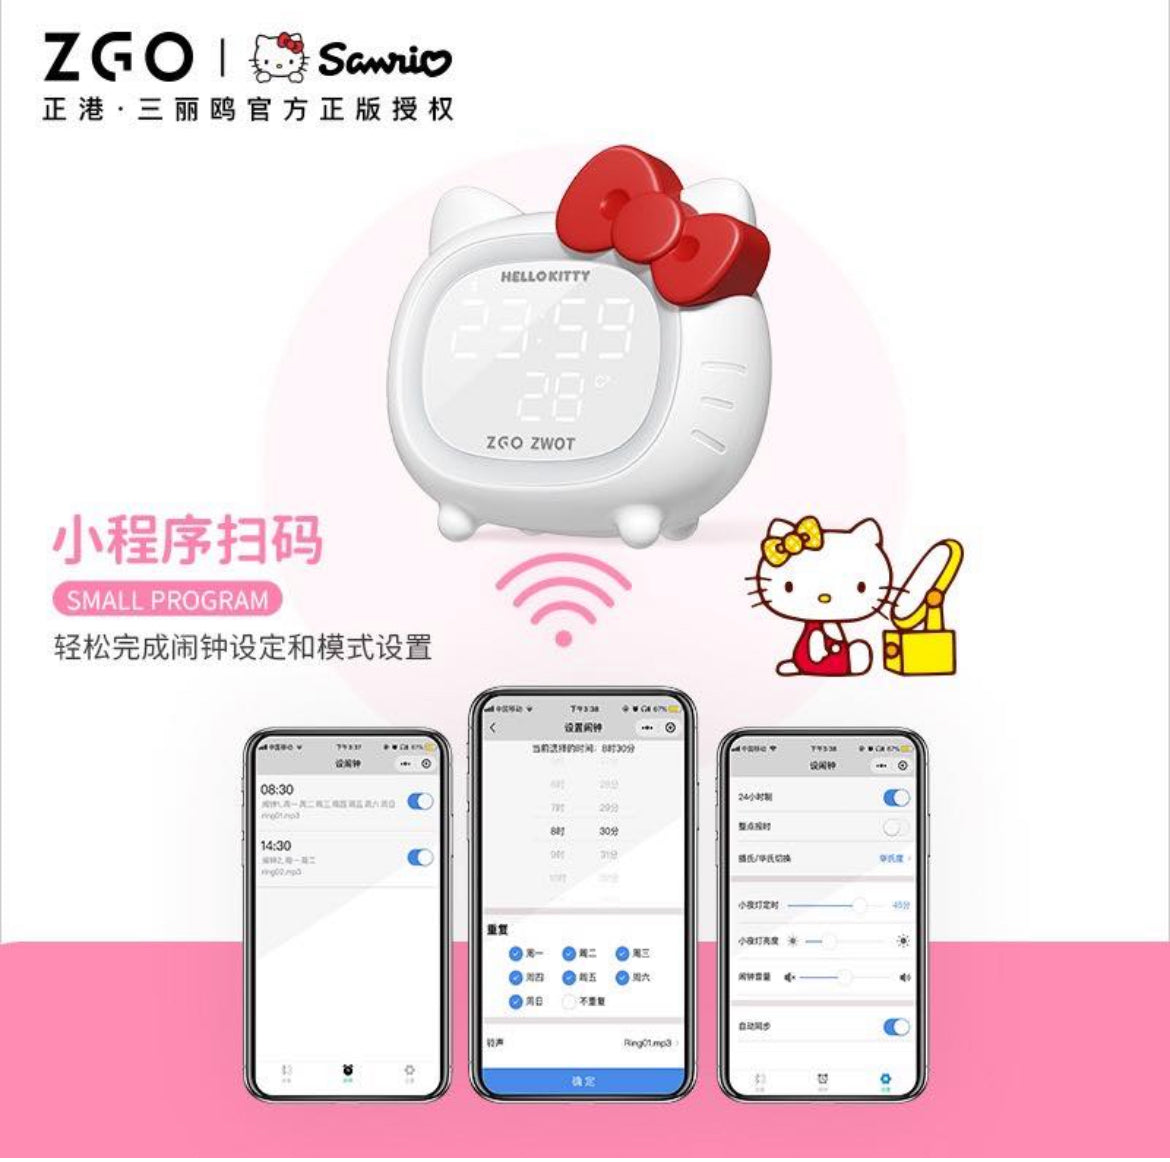 ZGO Sanrio Official Hello Kitty Bluetooth Speaker